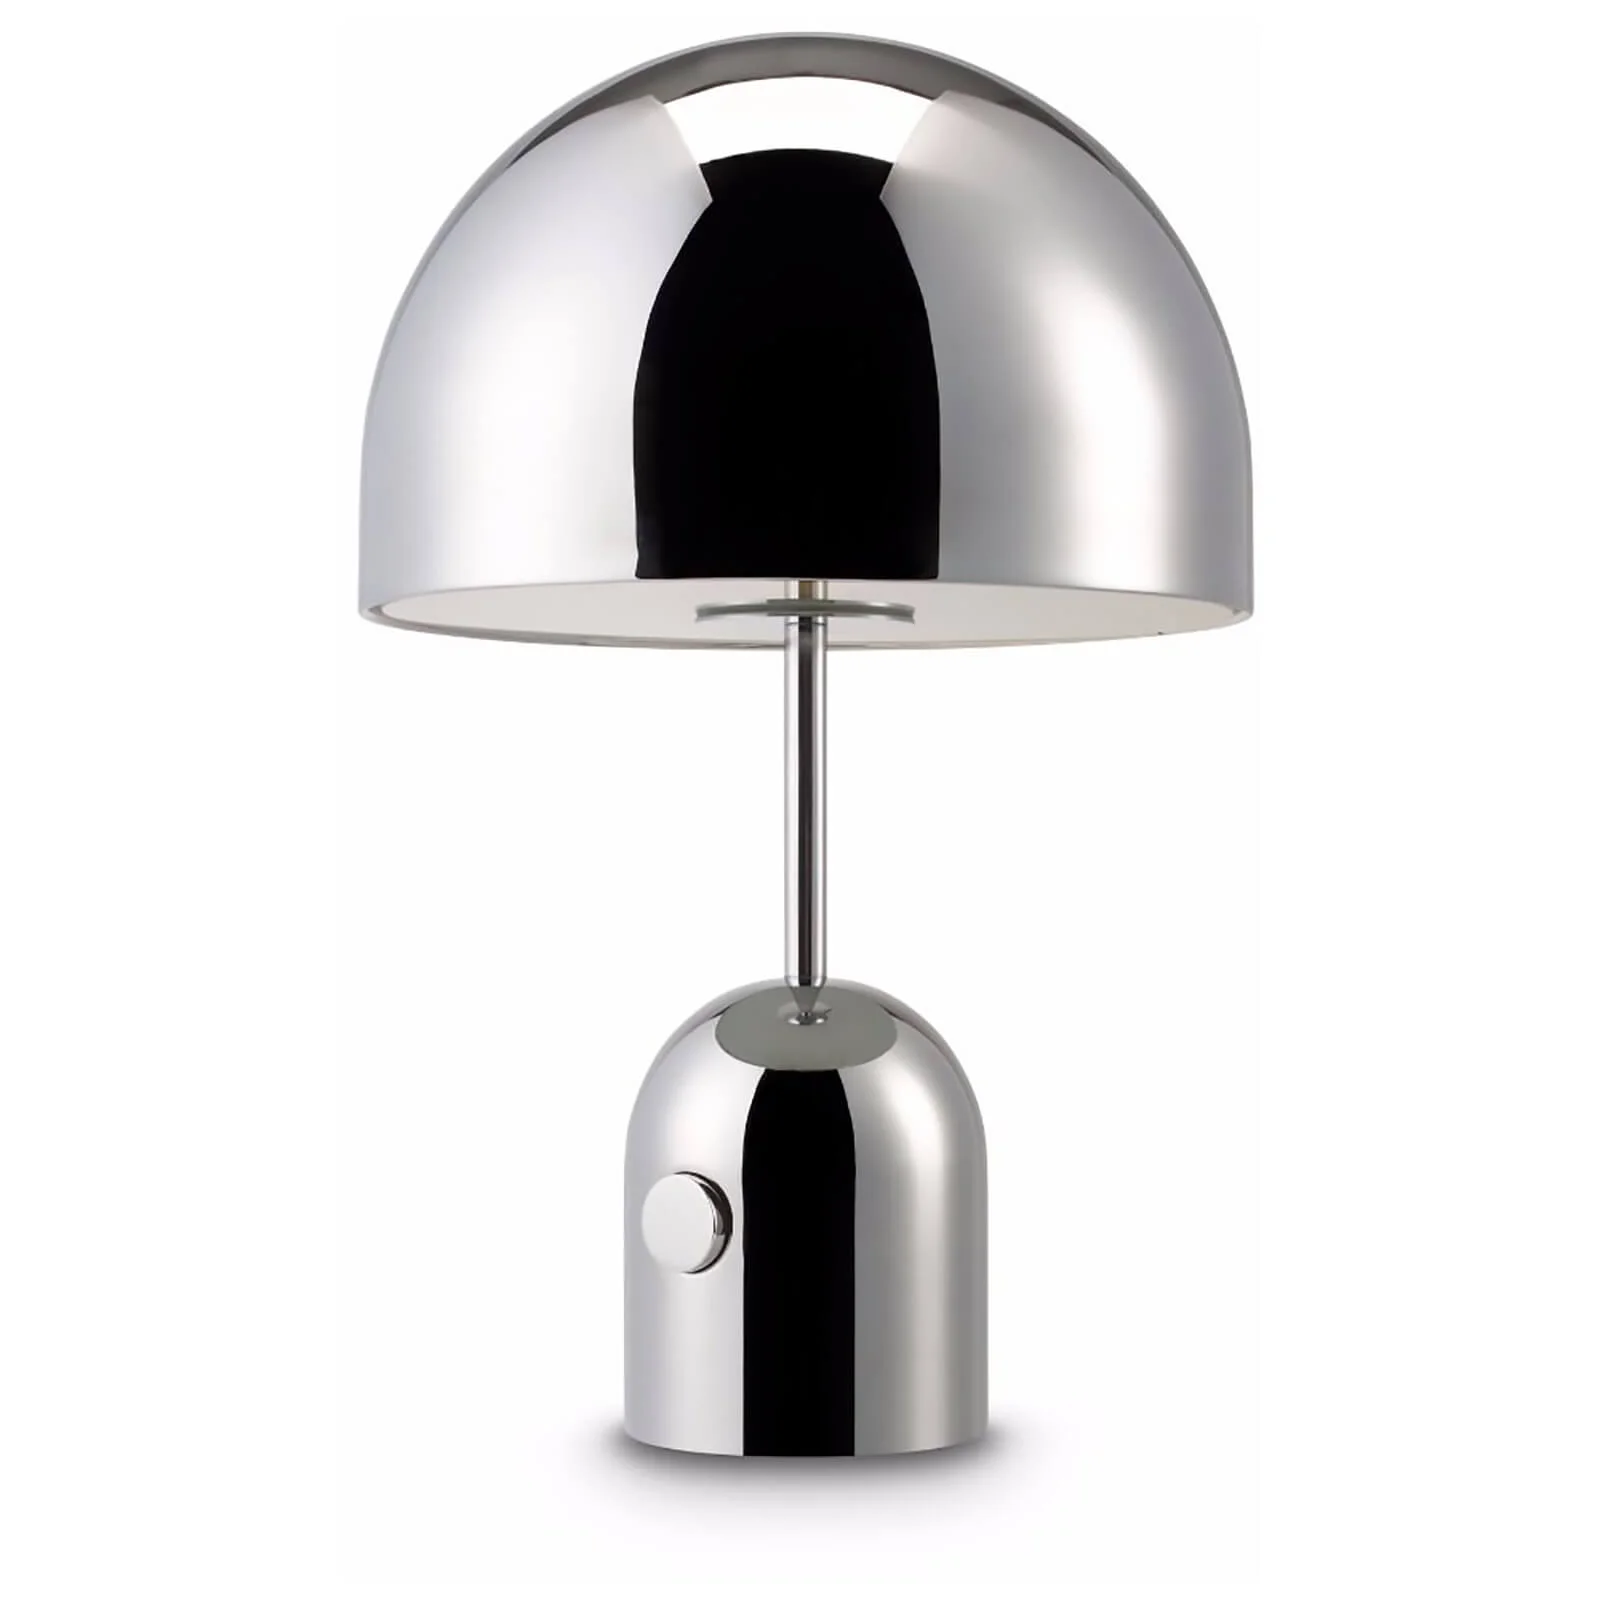 Tom Dixon Bell Table Lamp - Light Chrome Image 1